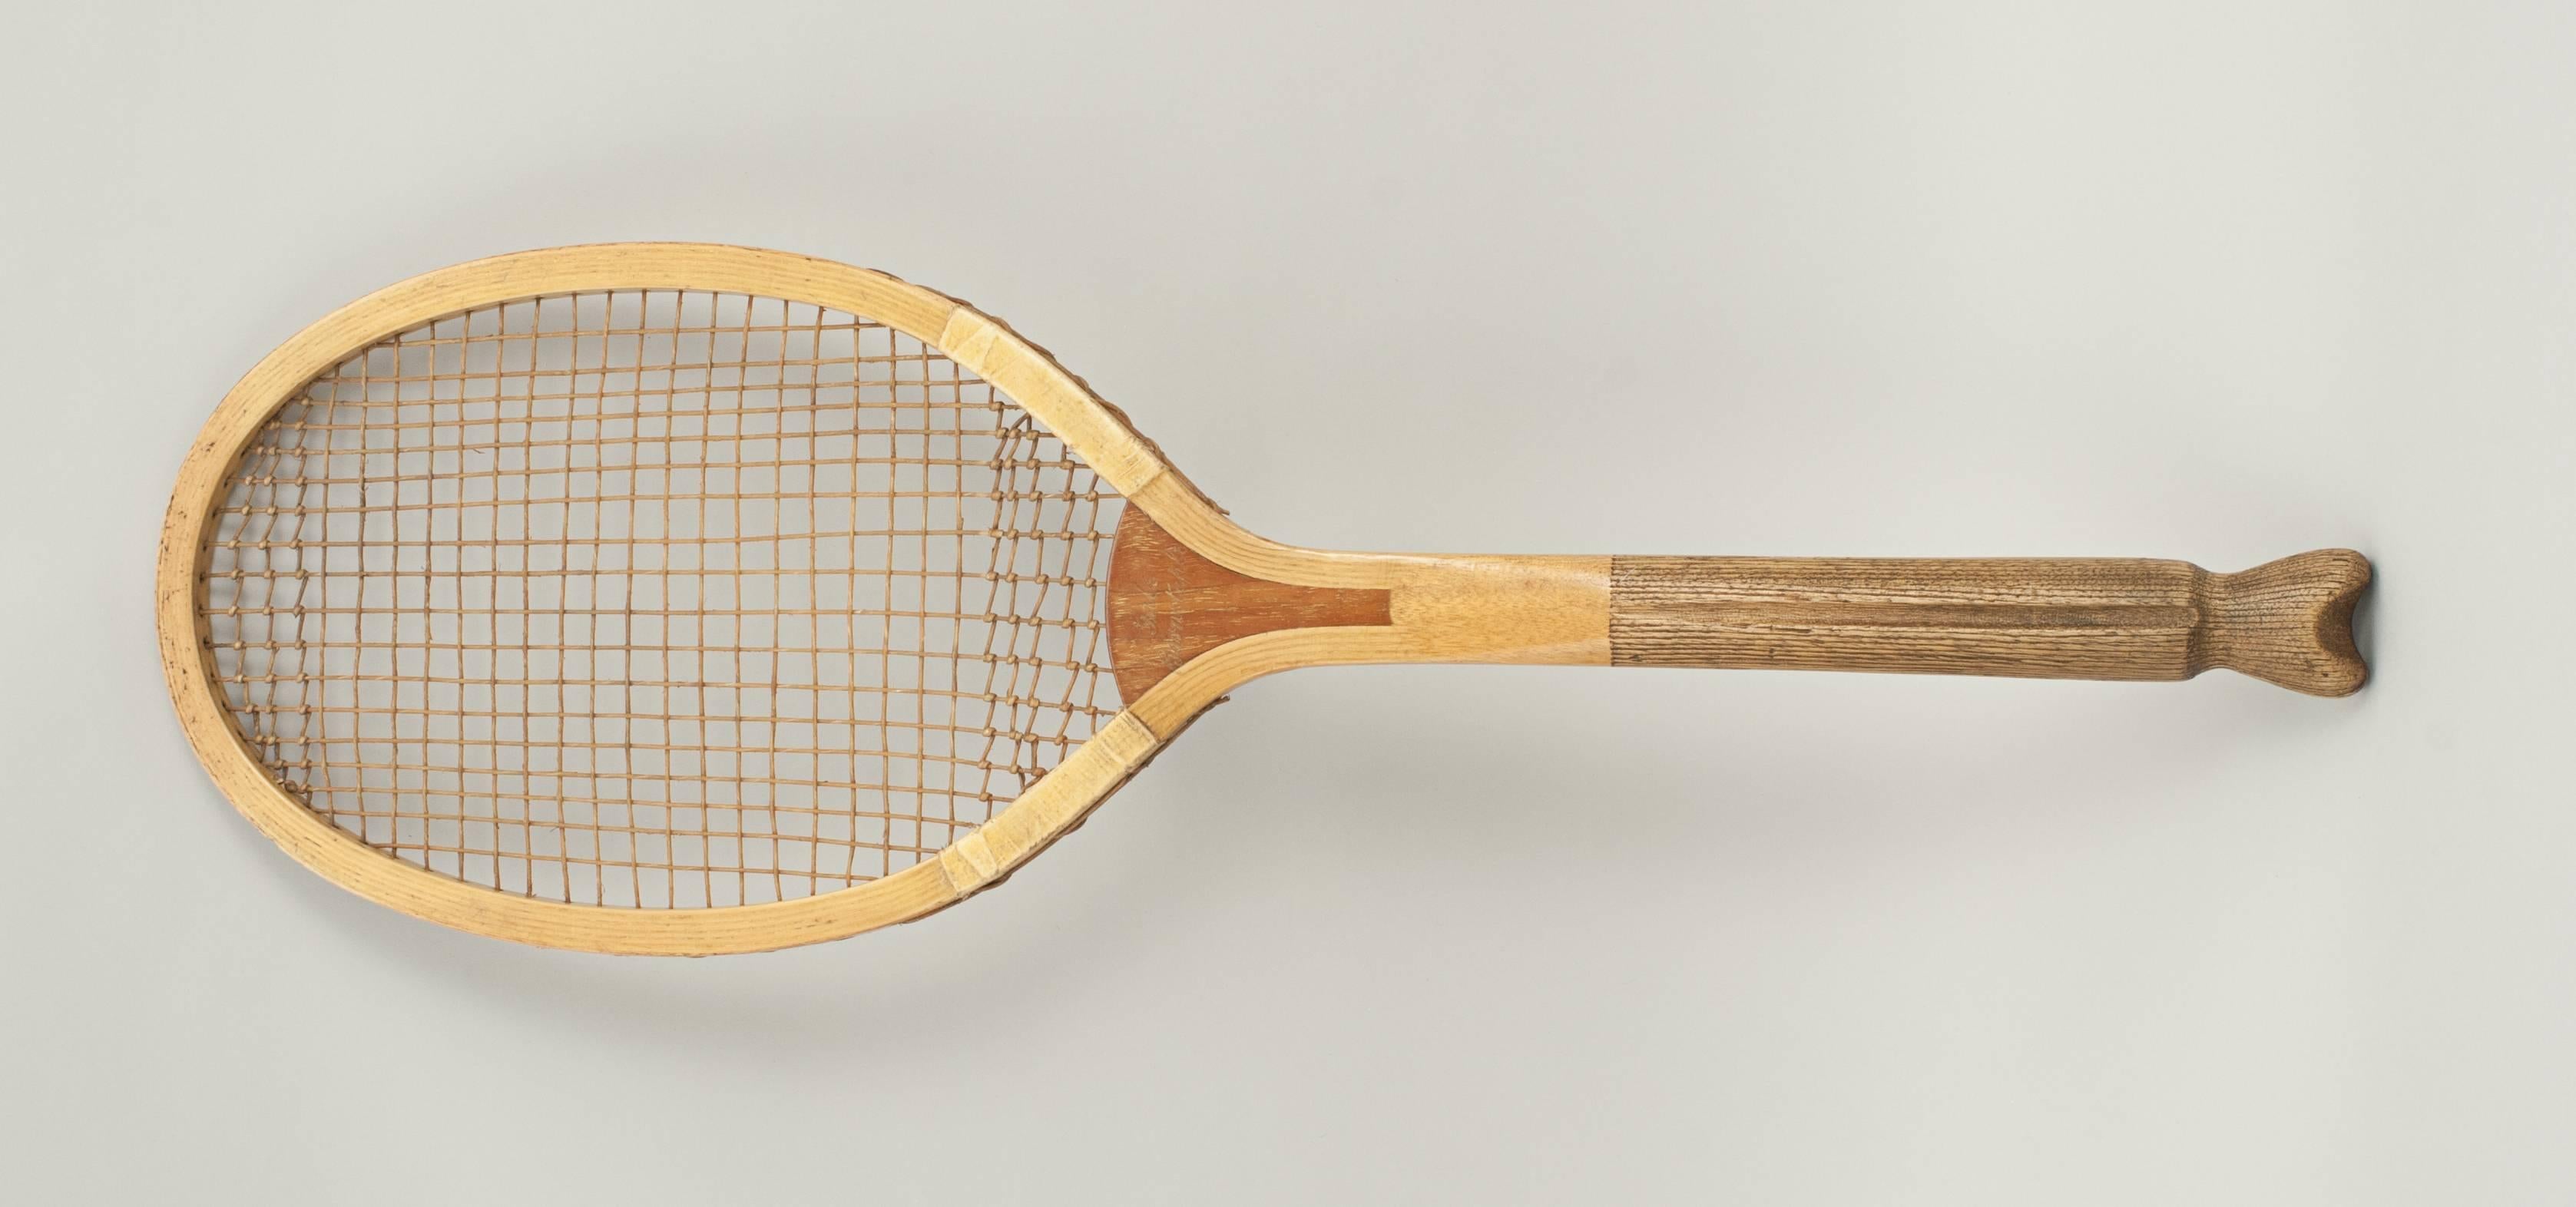 Early 20th Century Prosser Fishtail Tennis Racket